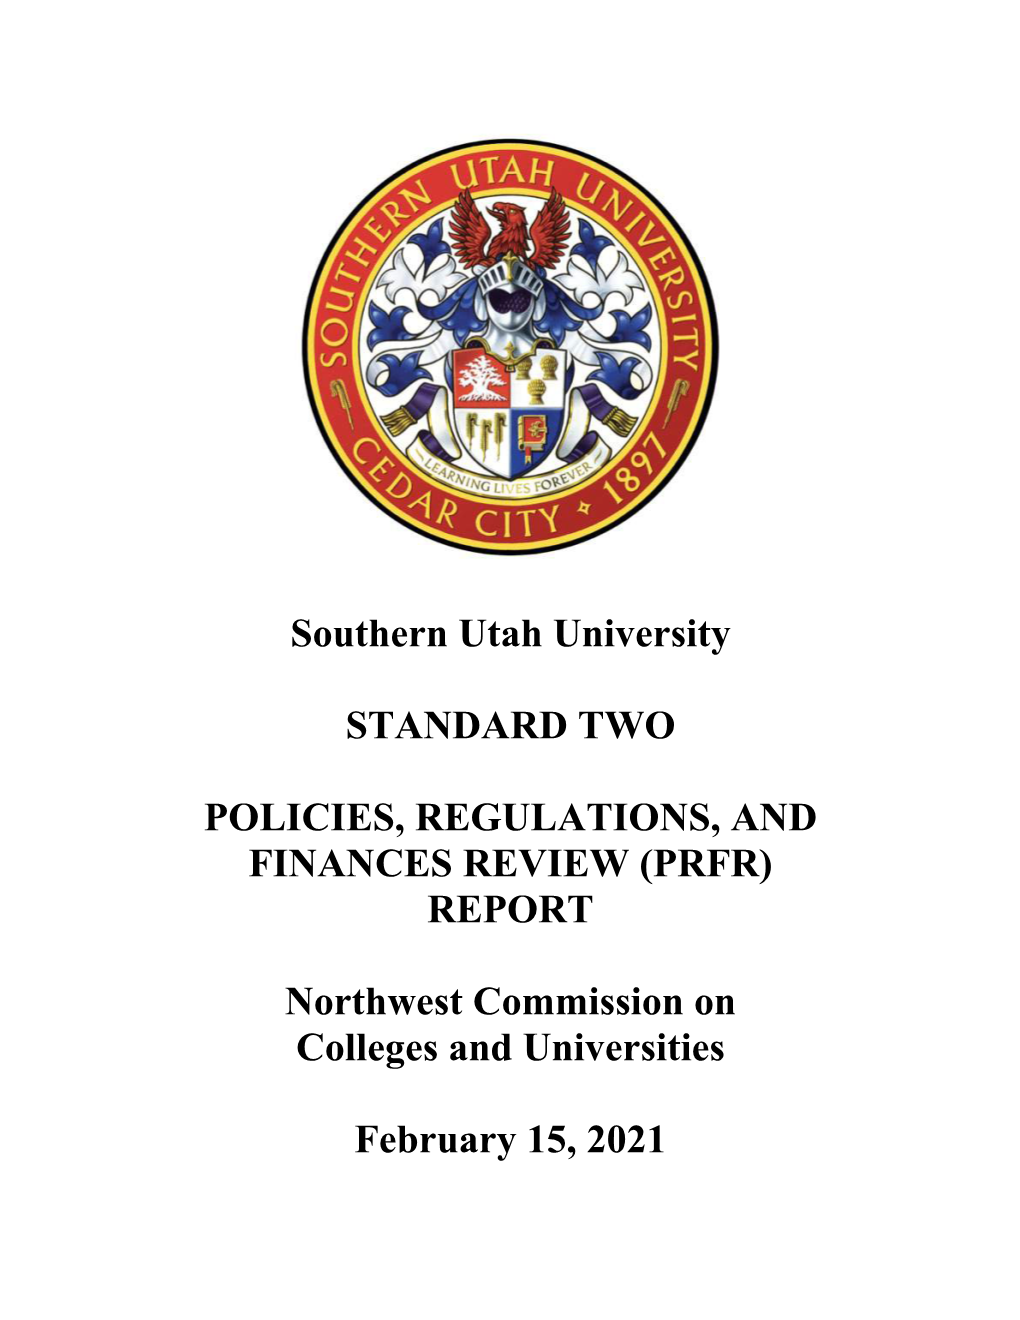 Southern Utah University STANDARD TWO POLICIES, REGULATIONS